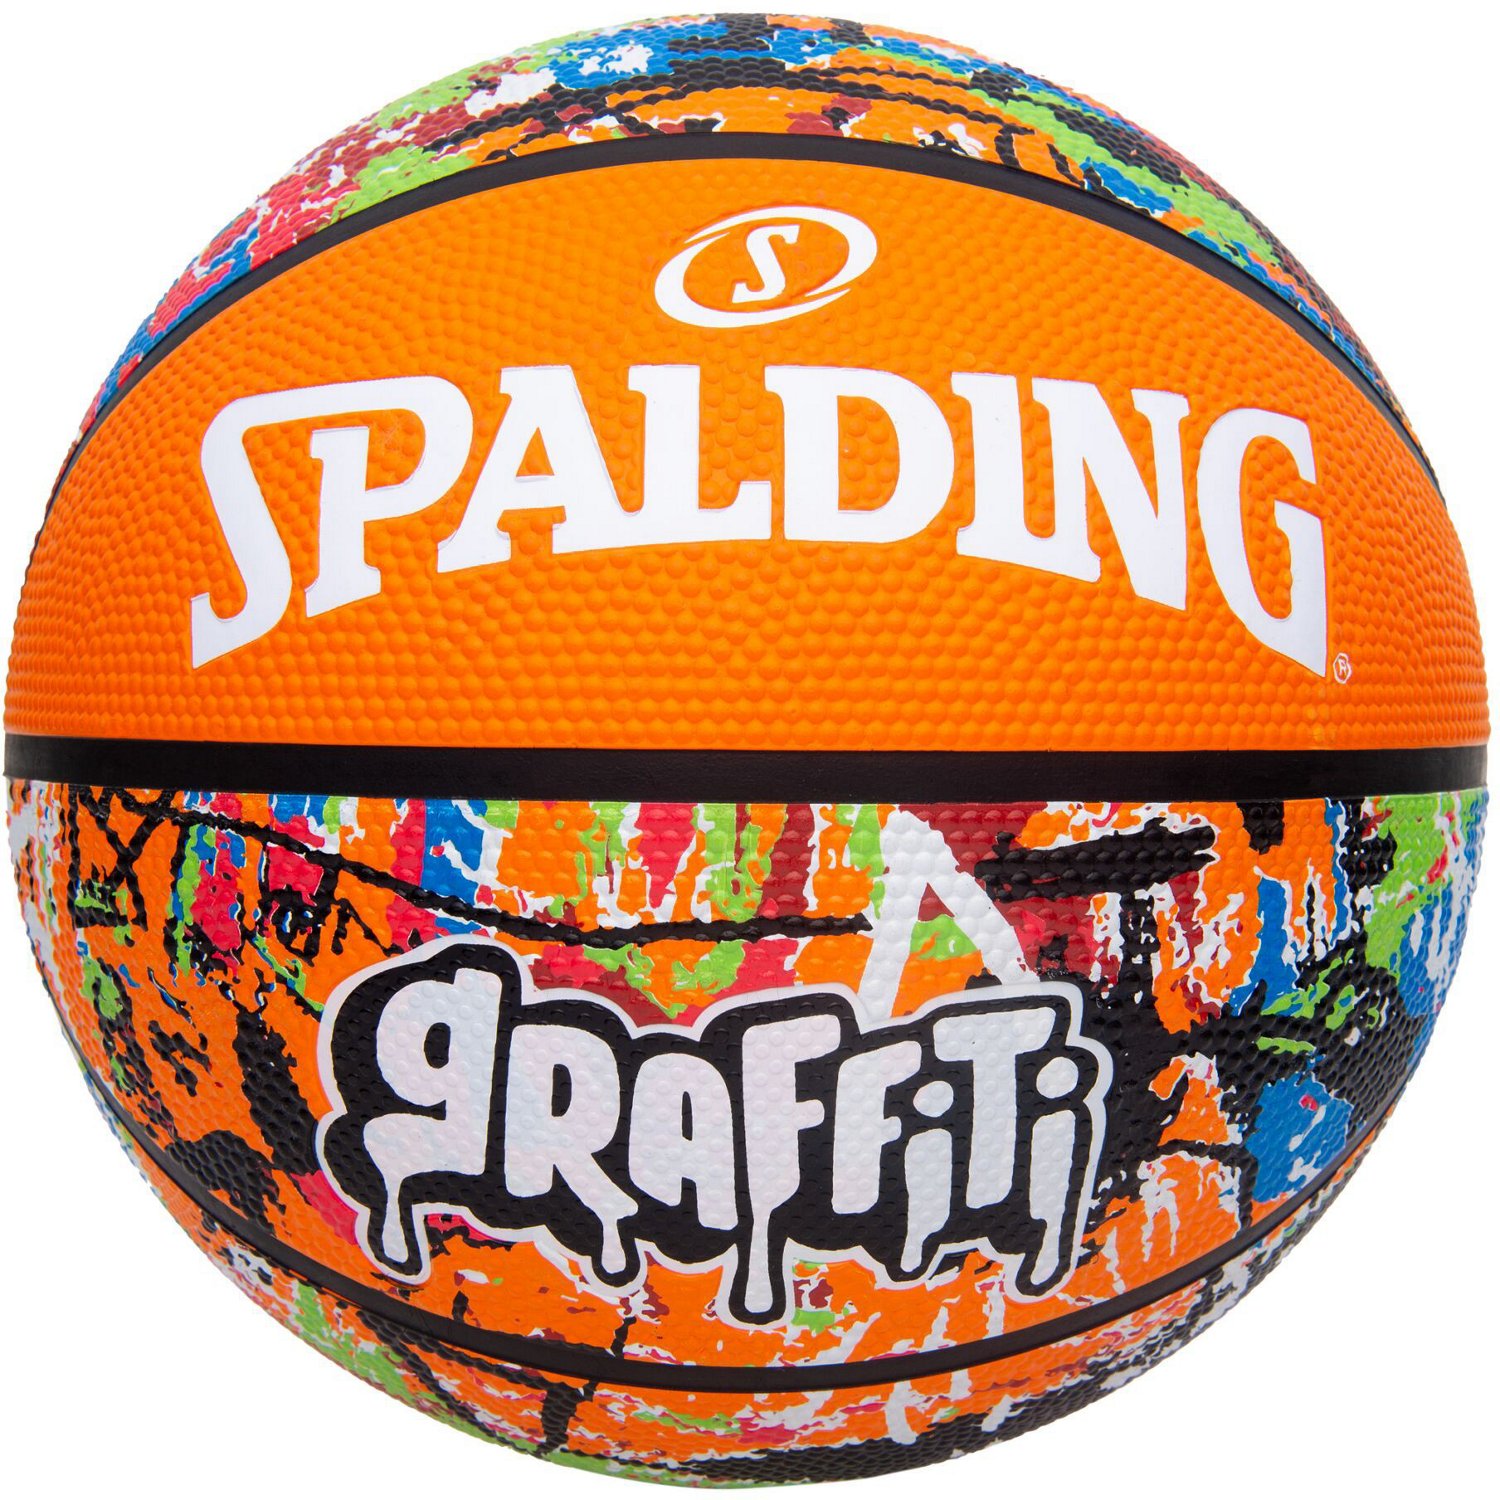 Spalding Graffiti Series Outdoor Basketball